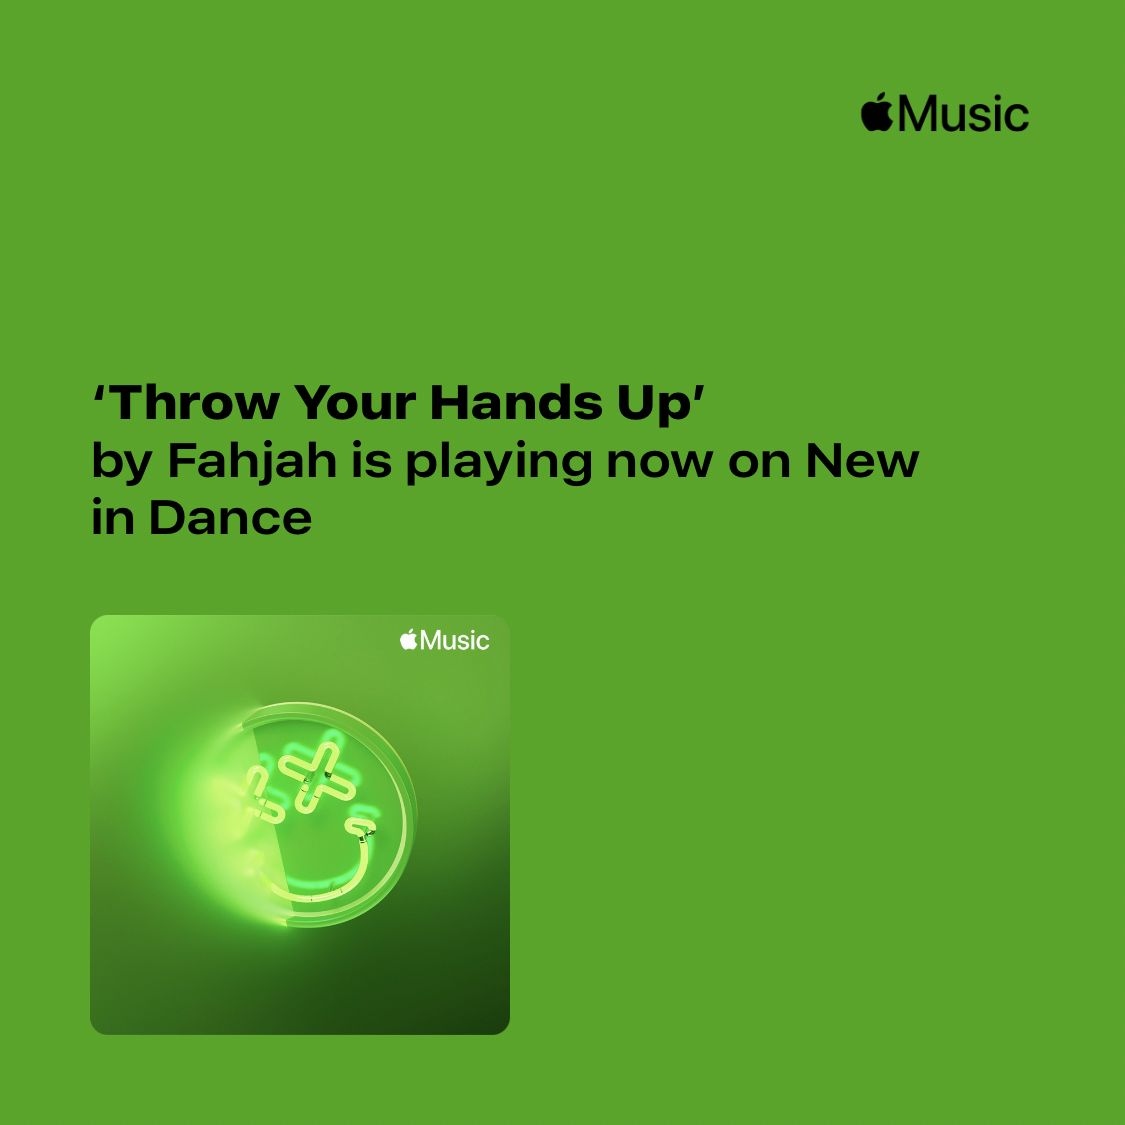 @FahjahMusic is on 🔥 with #ThrowYourHandsUp
@AppleMusic on
#danceXL
#FutureDanceHits
#DanceWorkout
#NewInDance
#BreakingDance
+ In The Mix w/ @SteveAoki + @R3HAB + @iamdevolve
music.lnk.to/w0xk9f